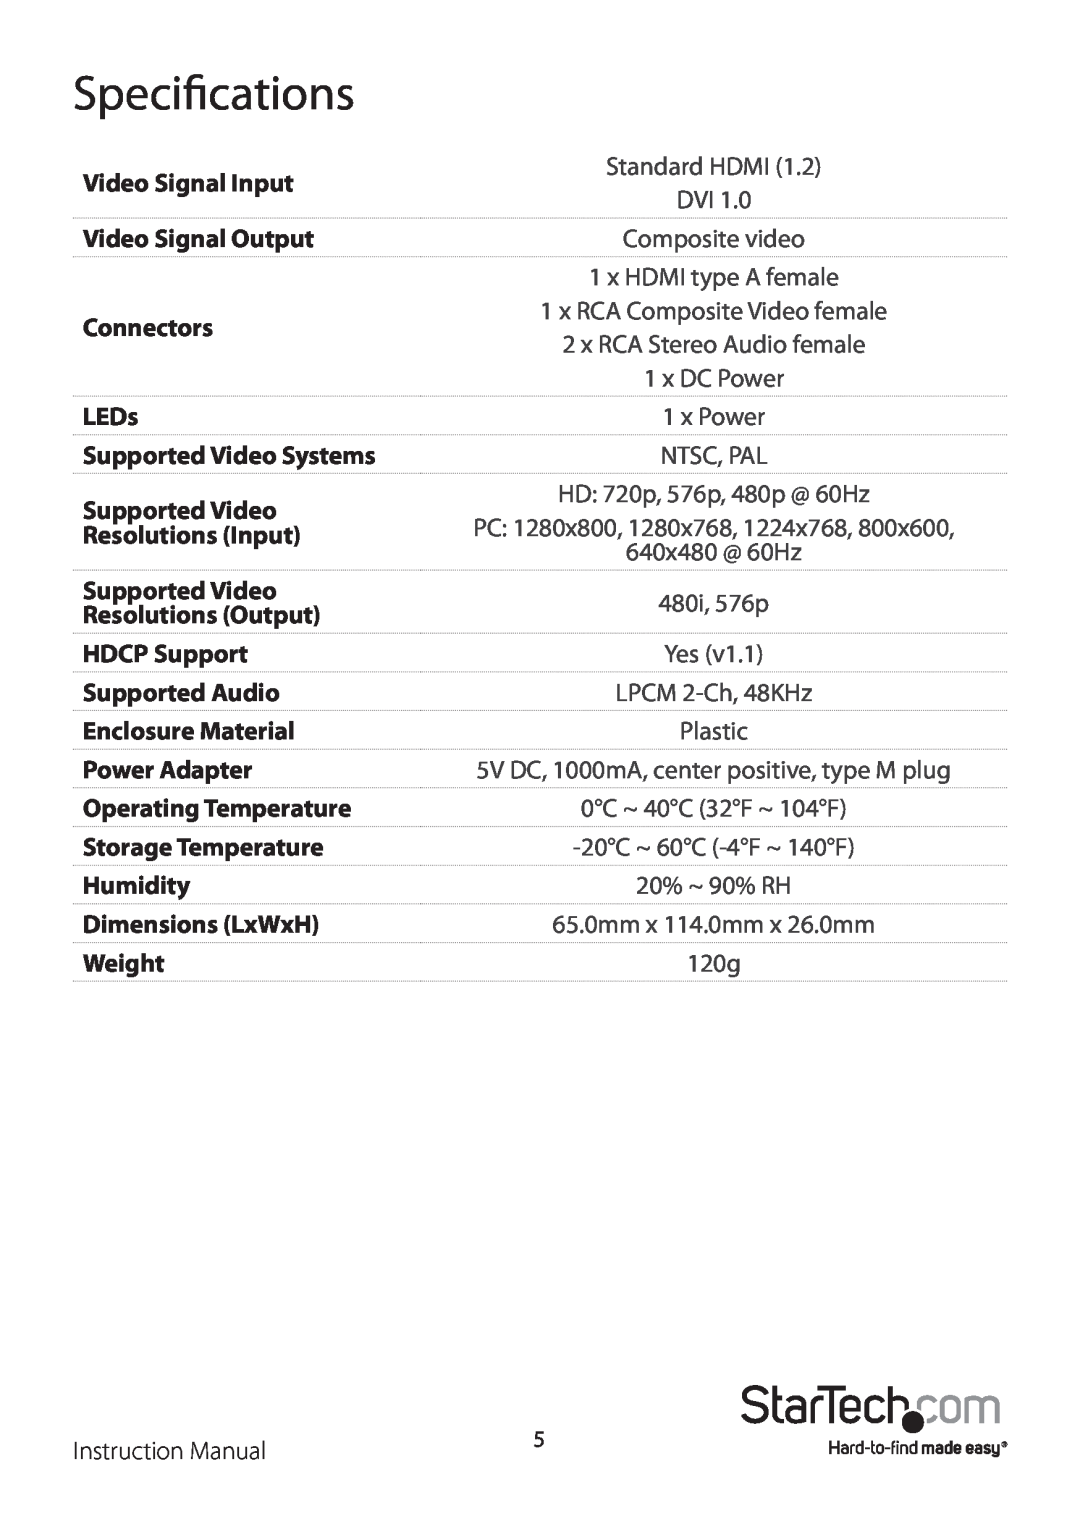 StarTech.com HD2VID manual Specifications 